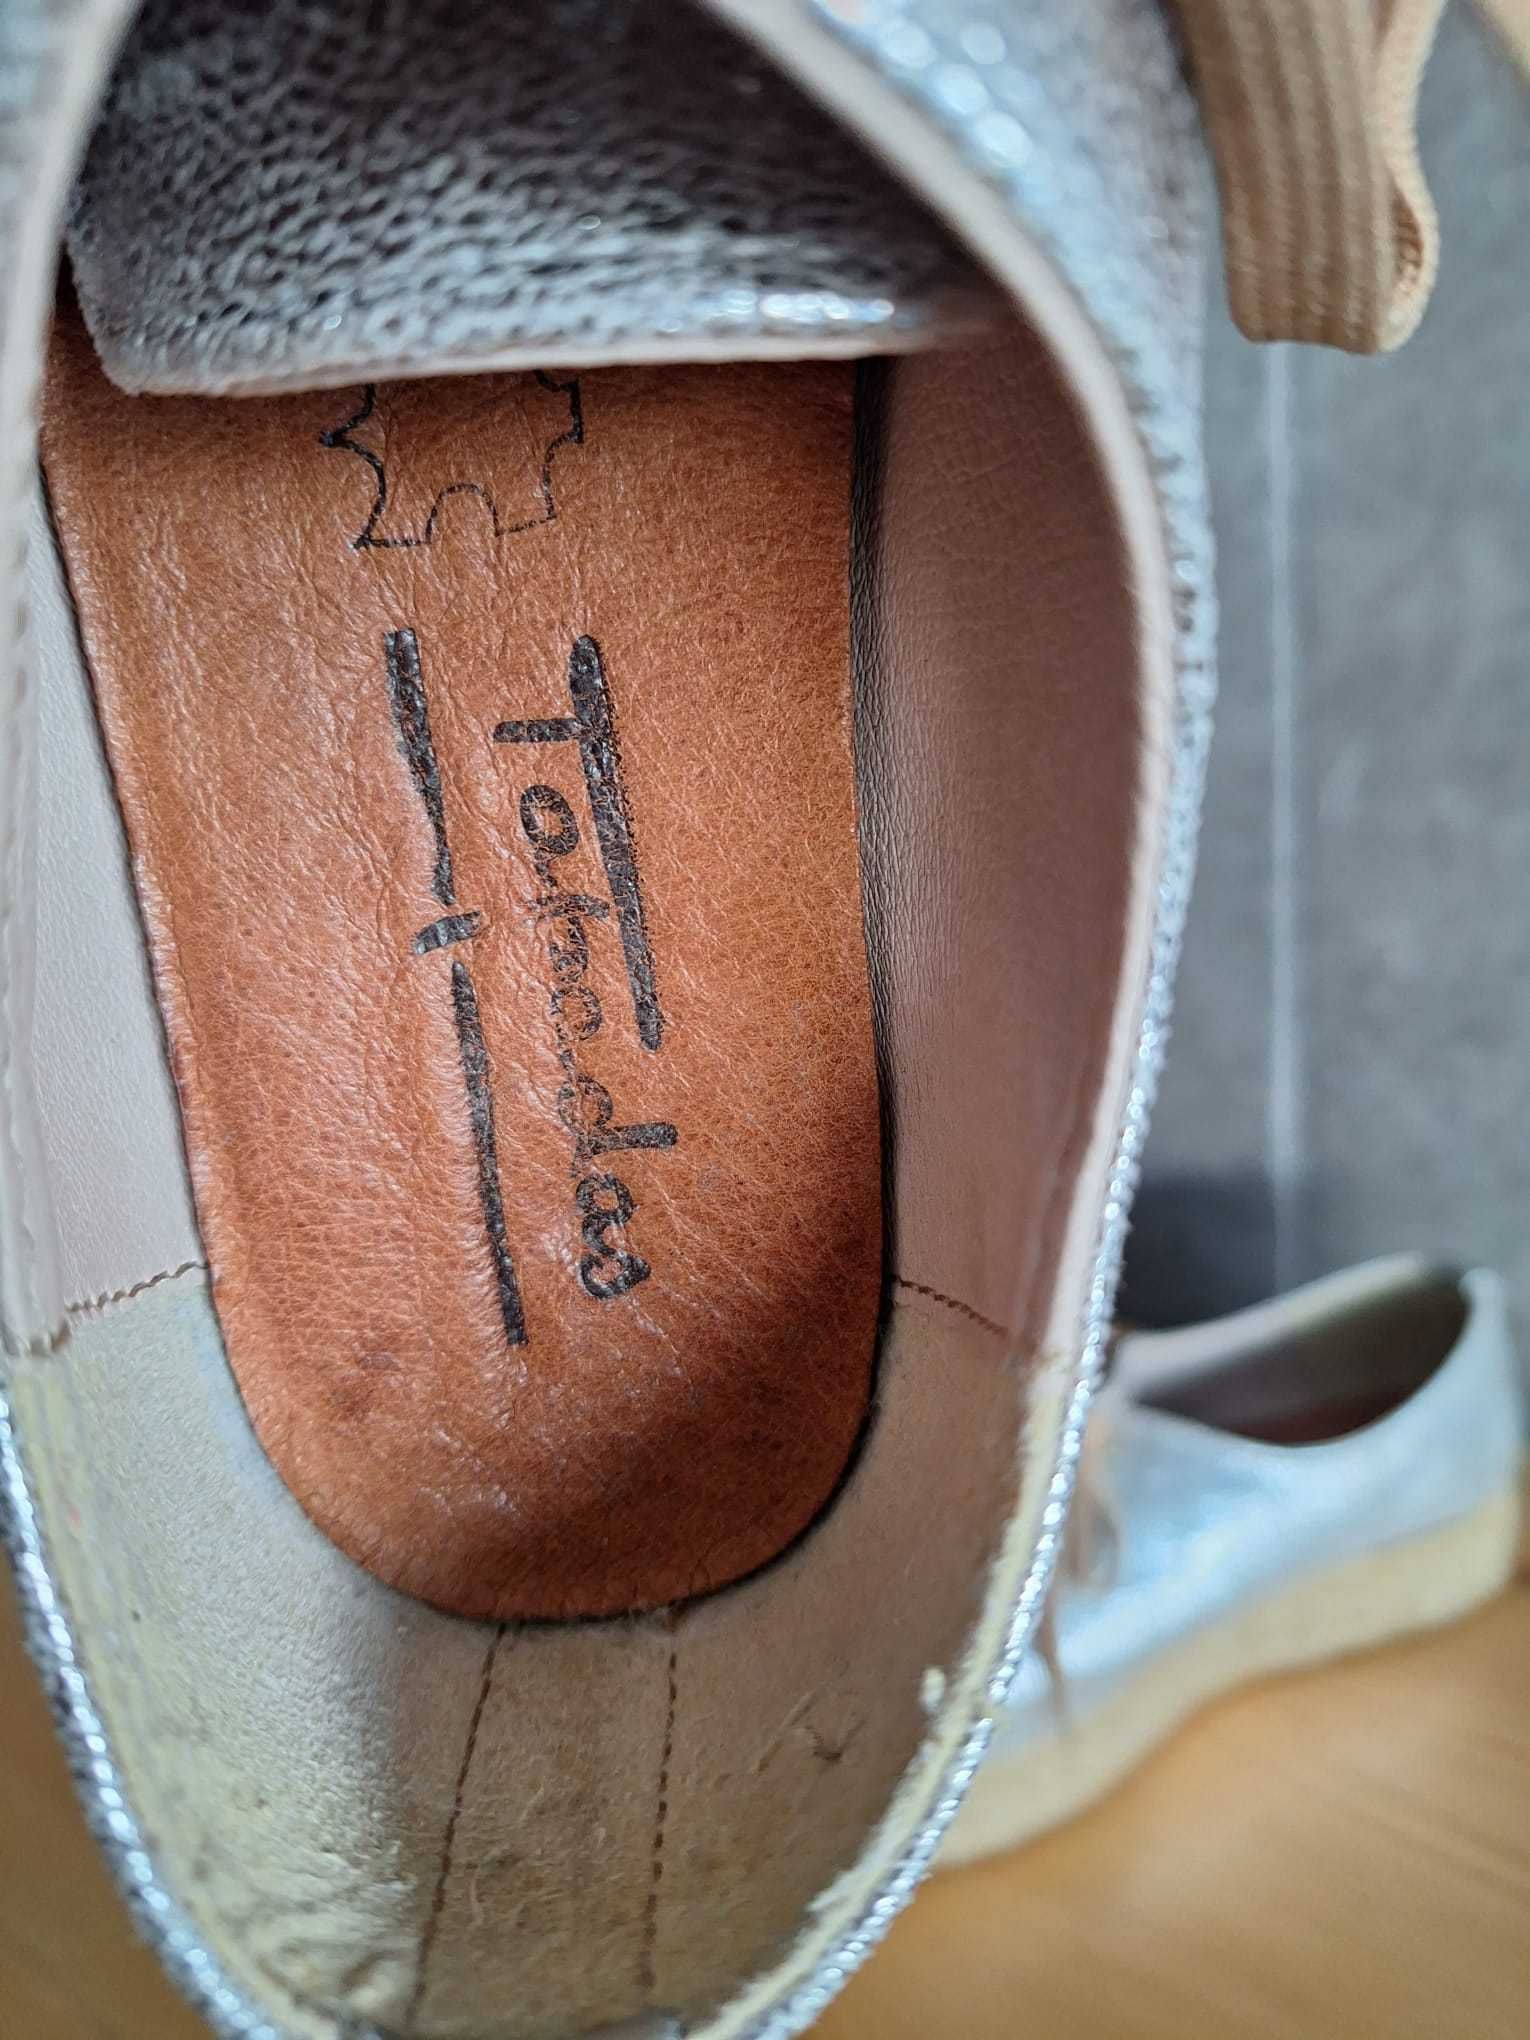 Sapatos rasos da marca Tapadas